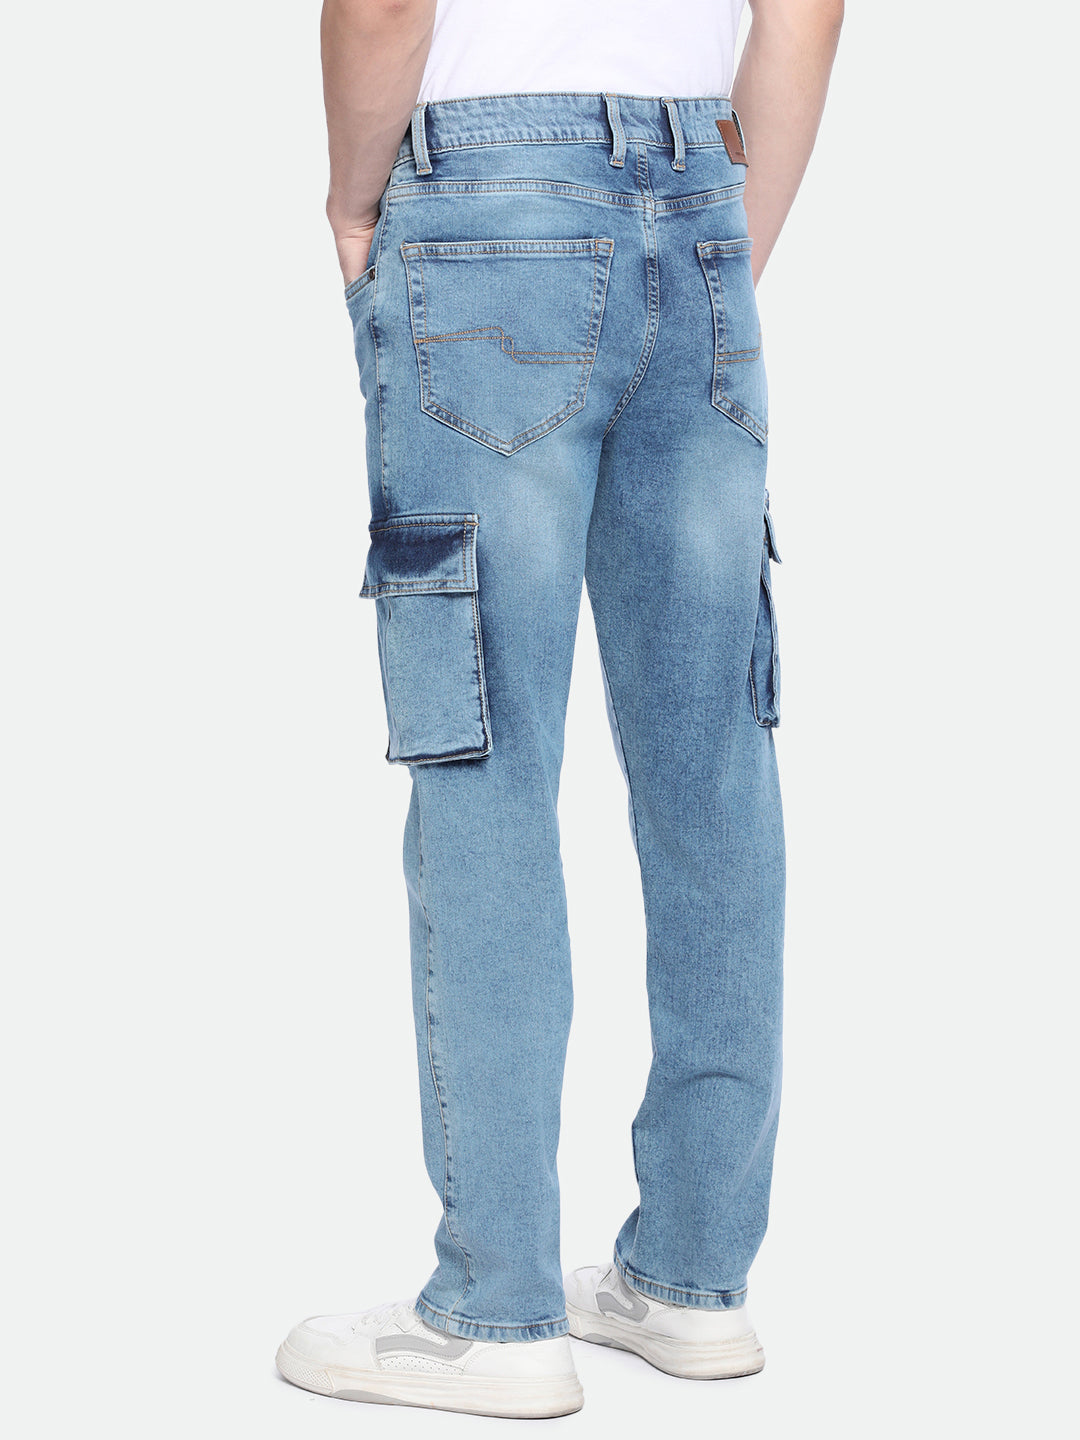 Dennis Lingo Mens's Mid Blue Solid Jeans